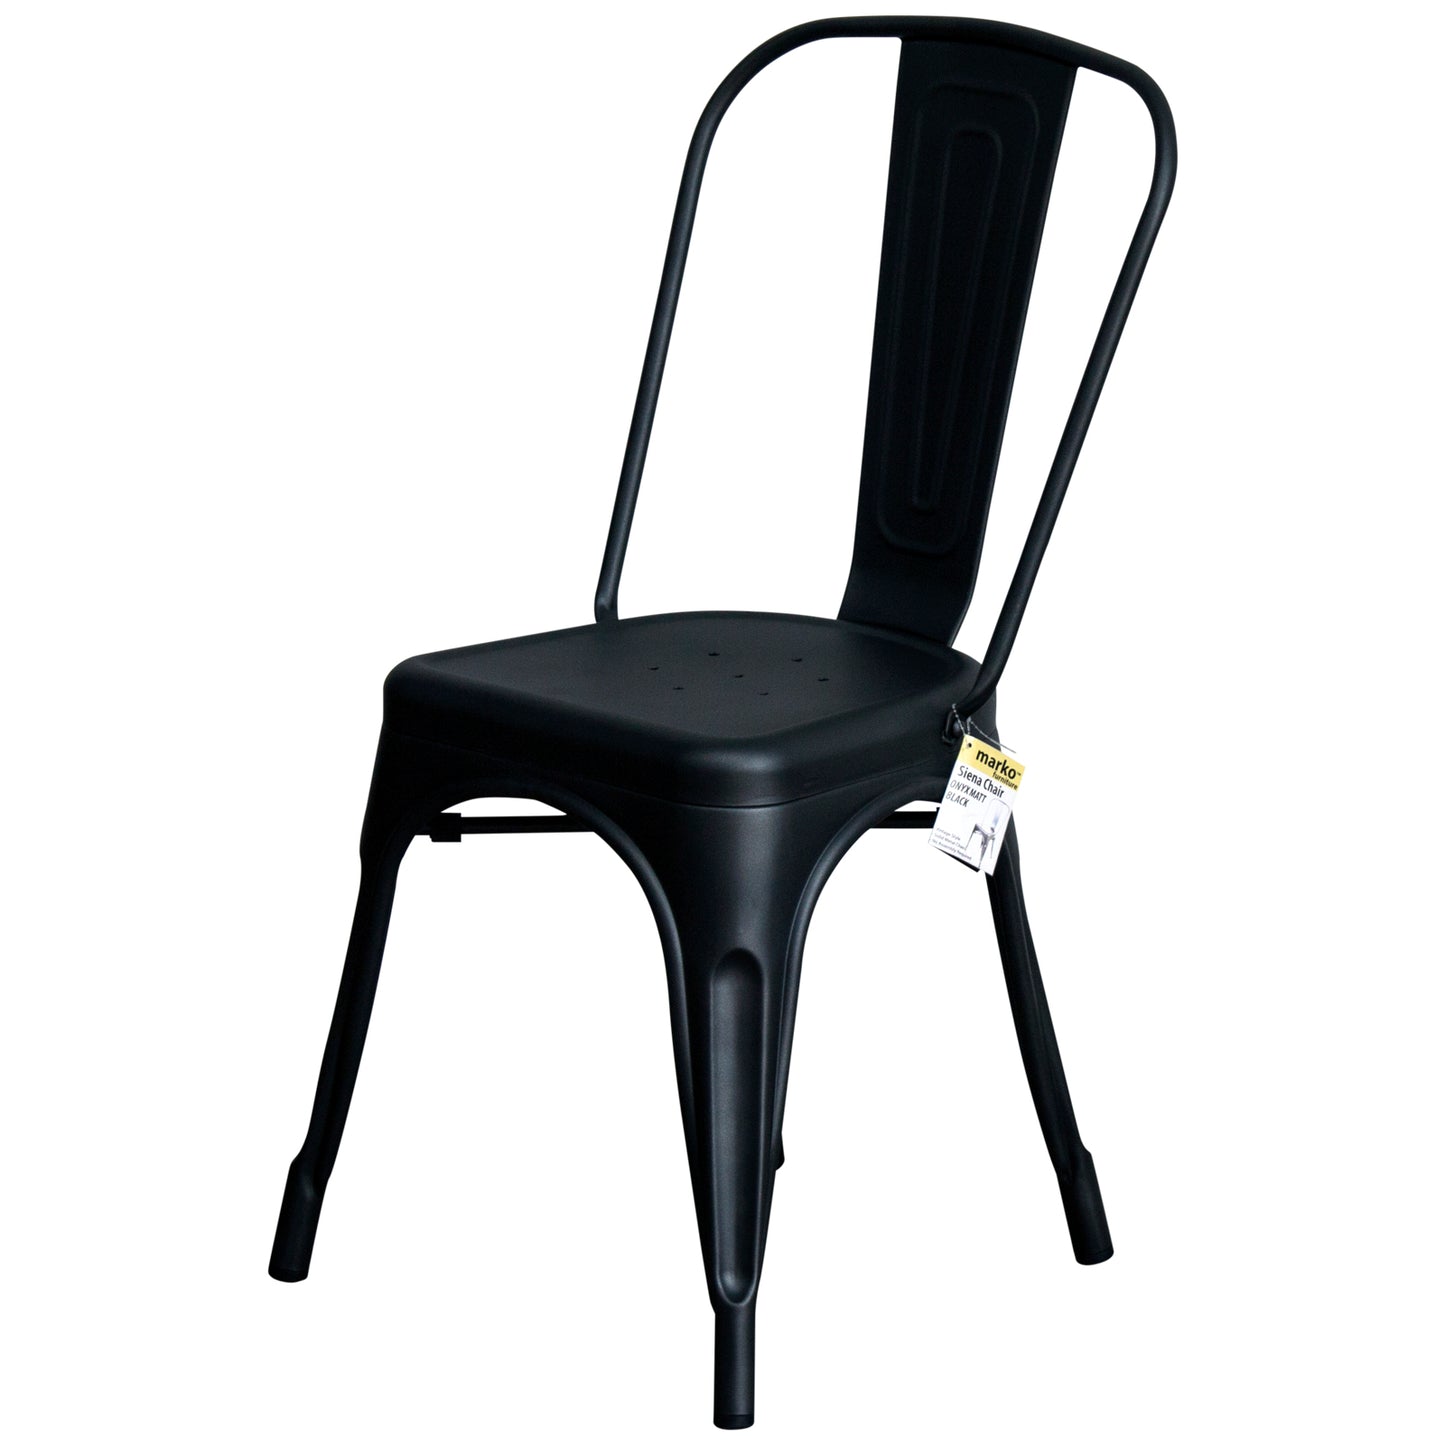 5PC Enna Table Siena Chair & Castel Stool Set - Onyx Matt Black